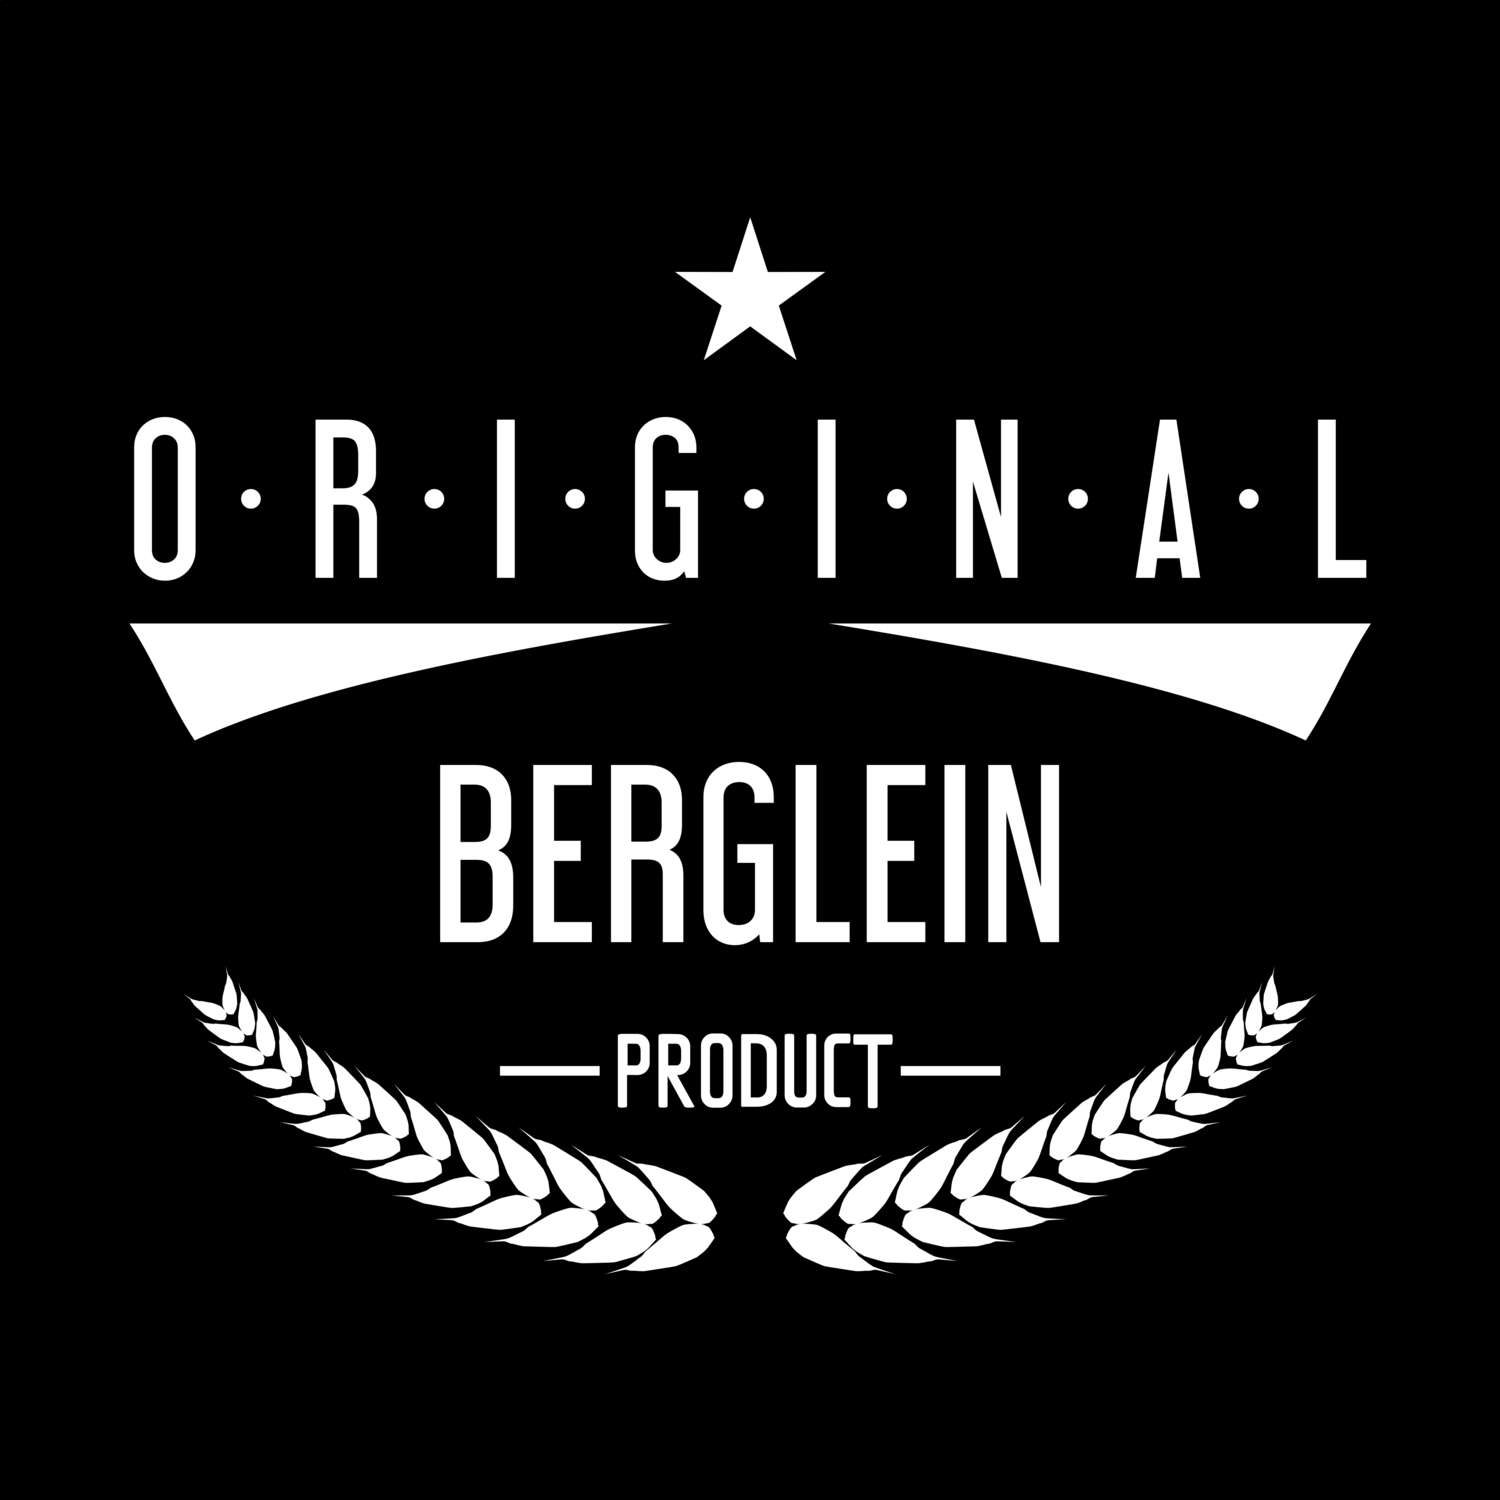 Berglein T-Shirt »Original Product«